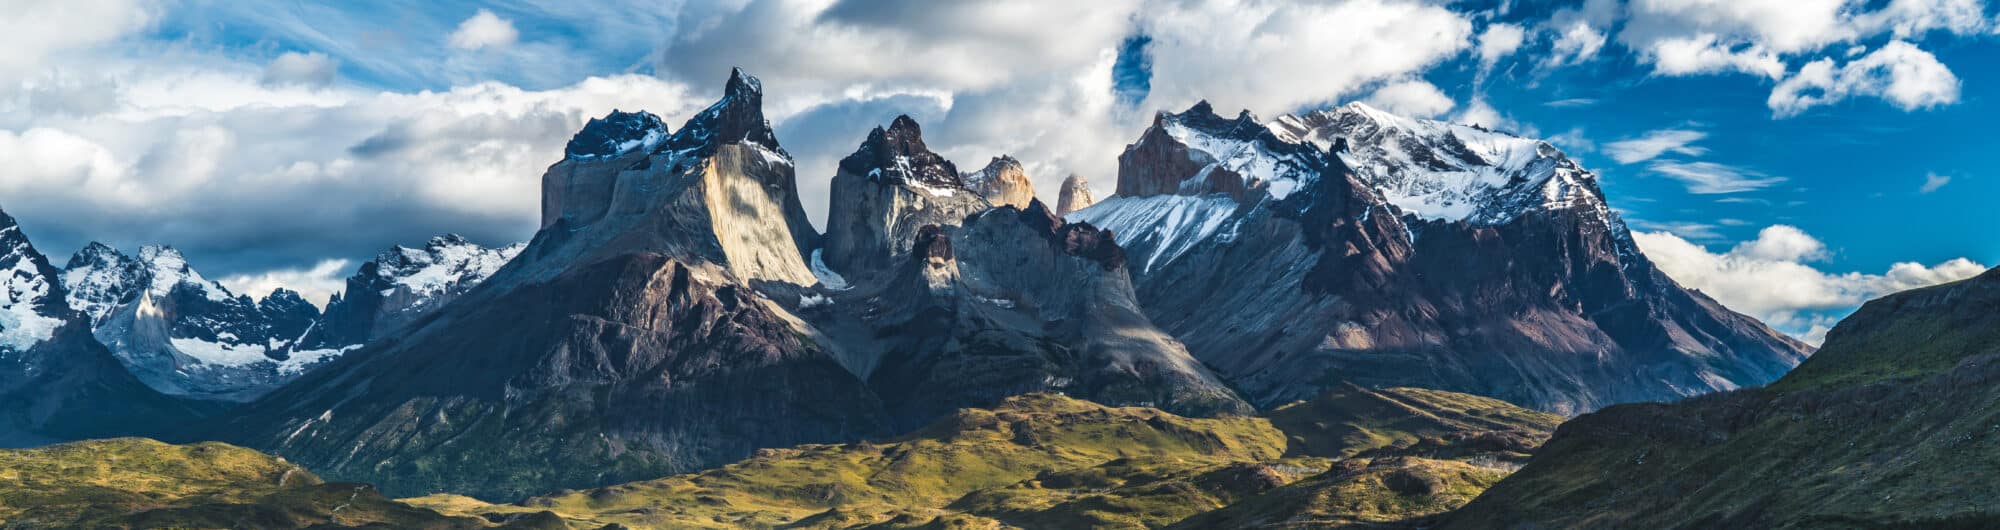 Torres del Paine w Chile Trekking W